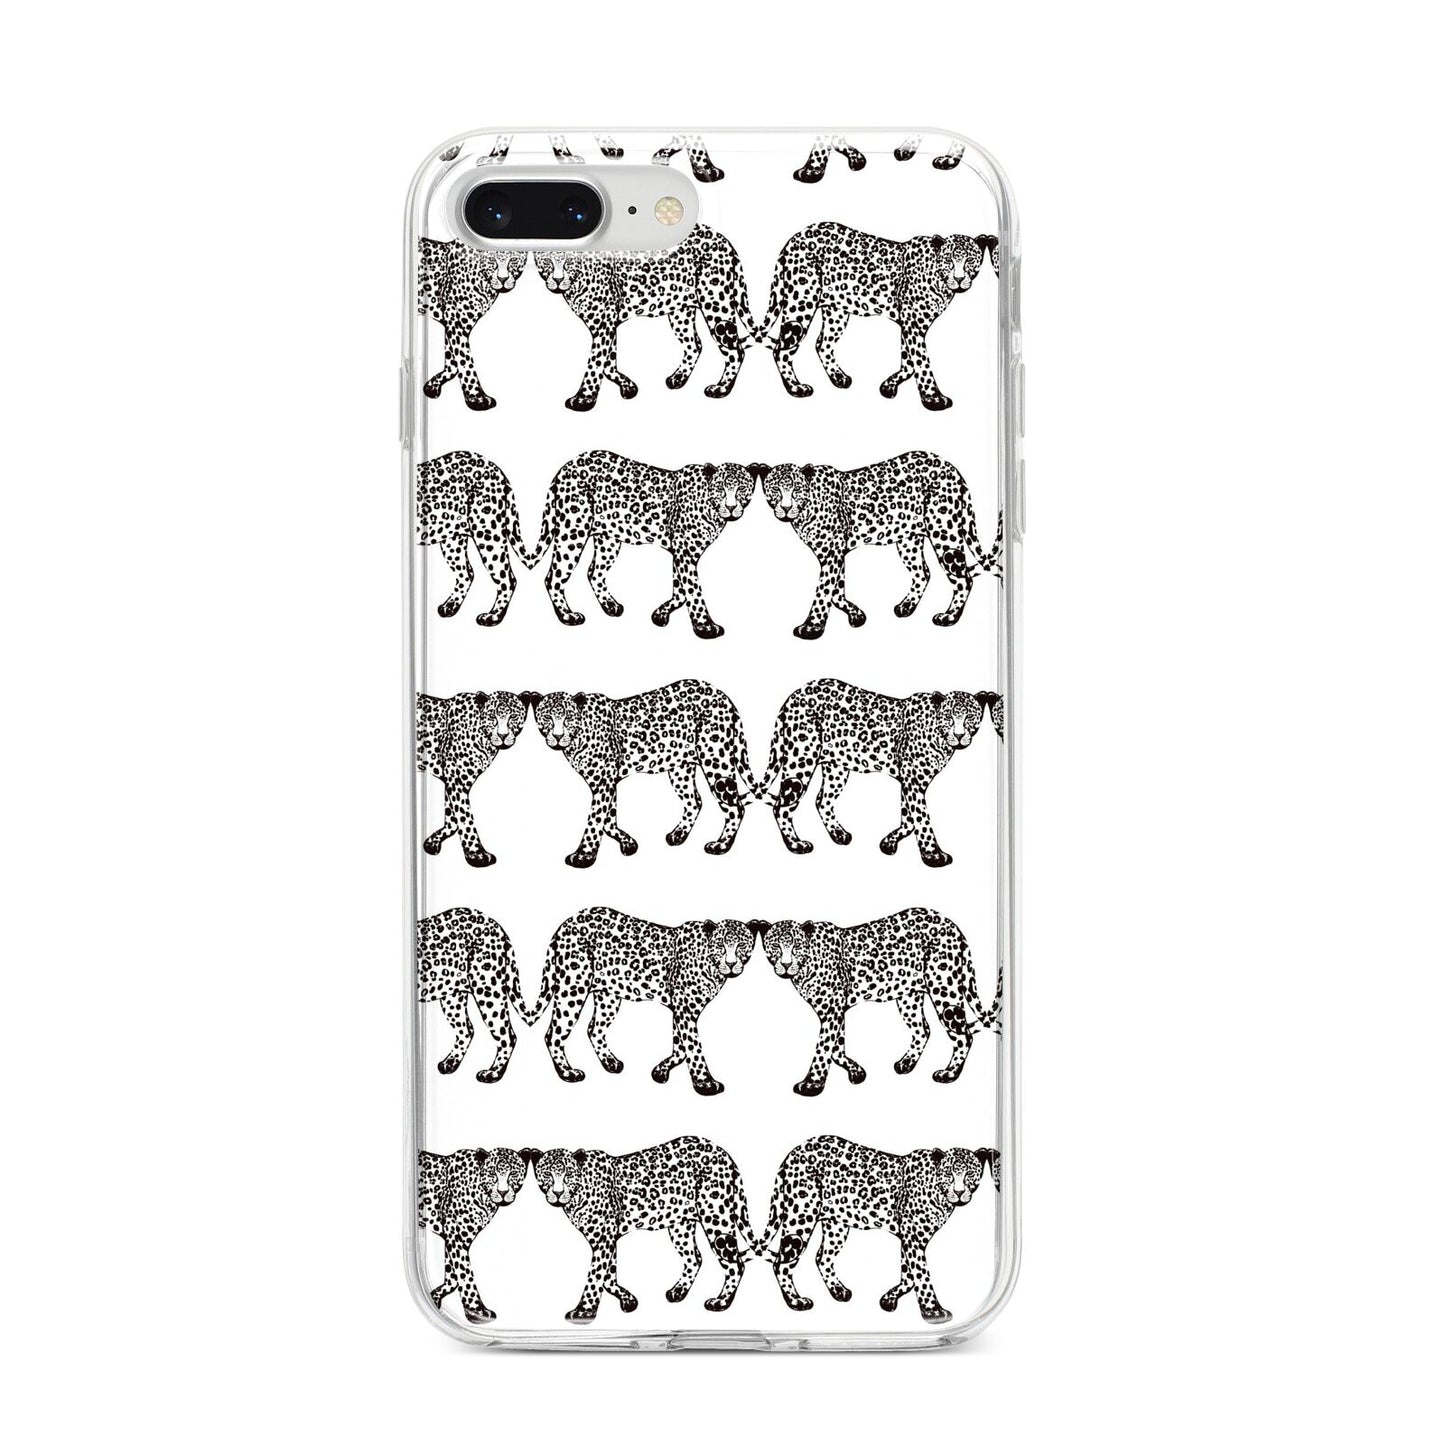 Monochrome Mirrored Leopard Print iPhone 8 Plus Bumper Case on Silver iPhone